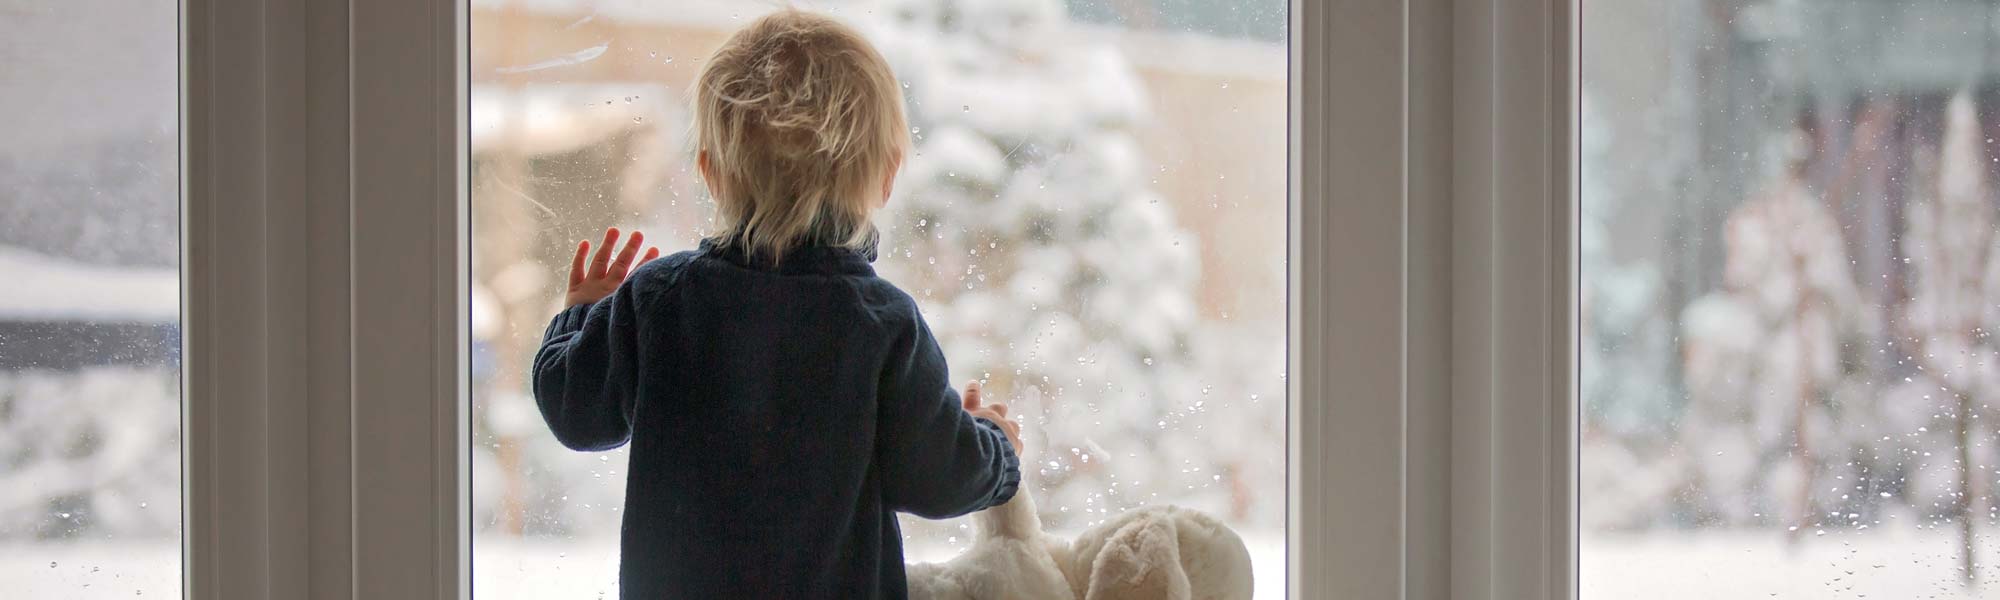 Toddler Looking At Snow